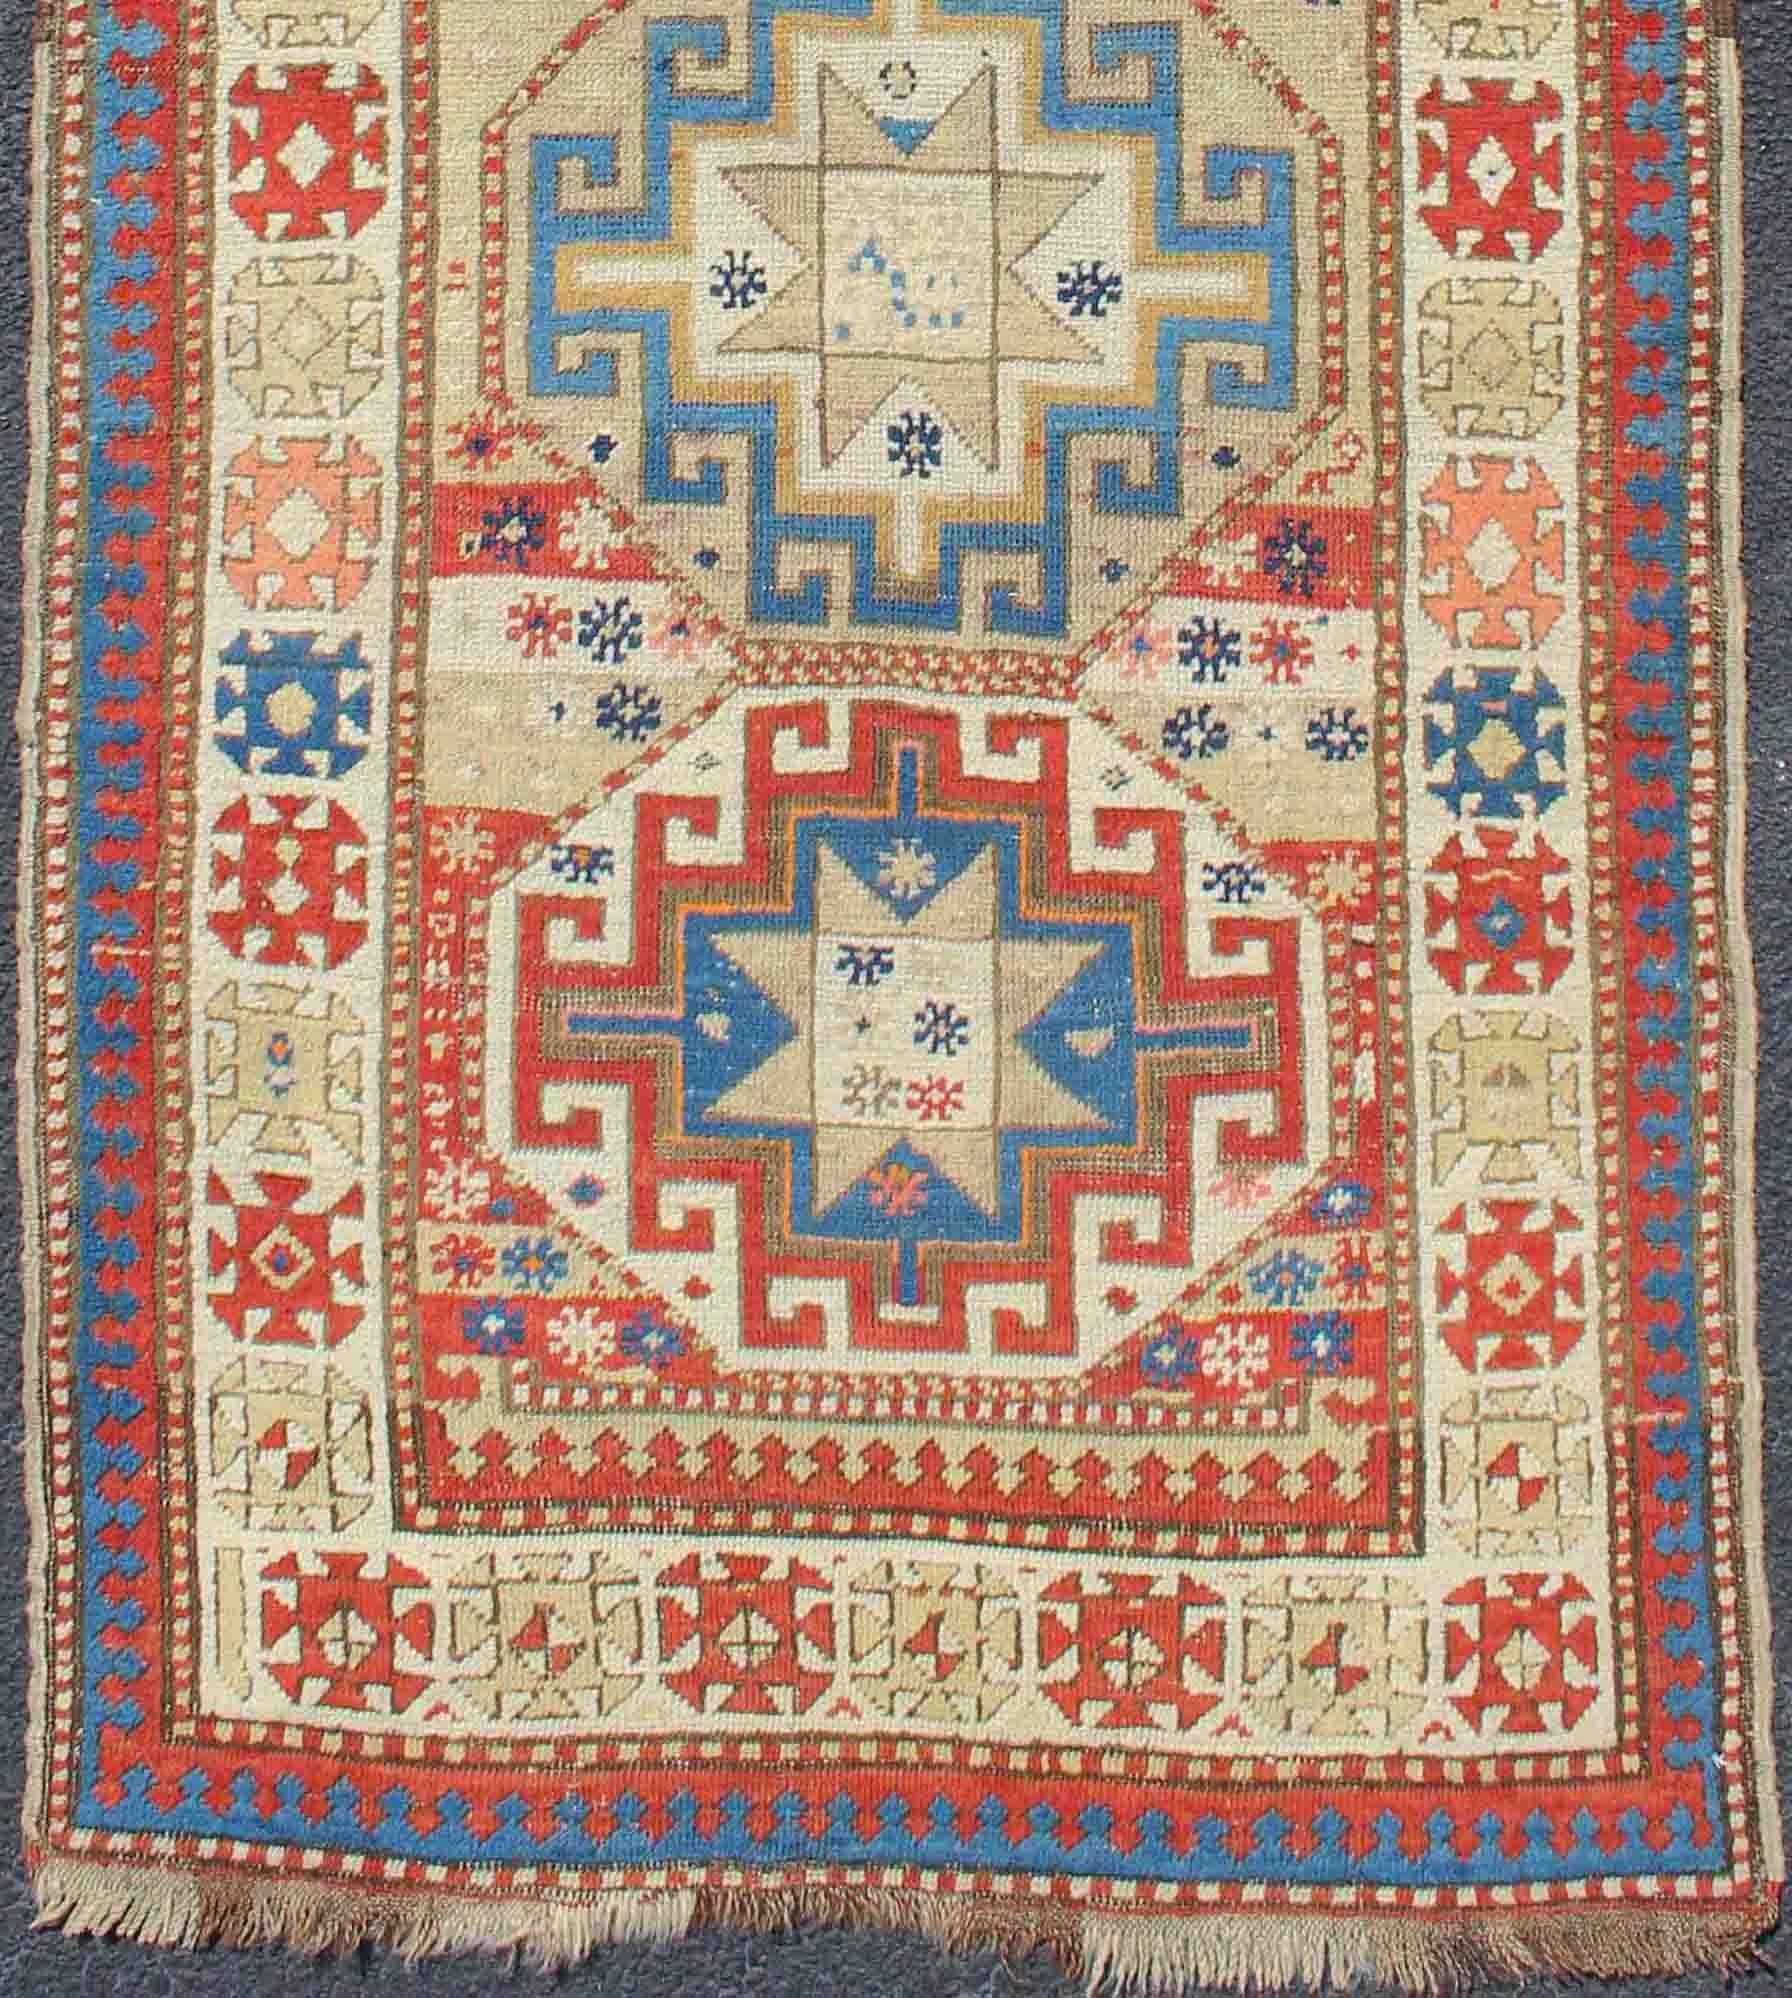 Geometric Medallion antique Caucasian Kazak rug in lighter tones. rug 19-0811, country of origin / type: Iran / Caucasian Kazak, circa 1880.
Kazak rugs are among the most desirable Caucasian rugs. The vibrant reds, blues, and ivories that decorate